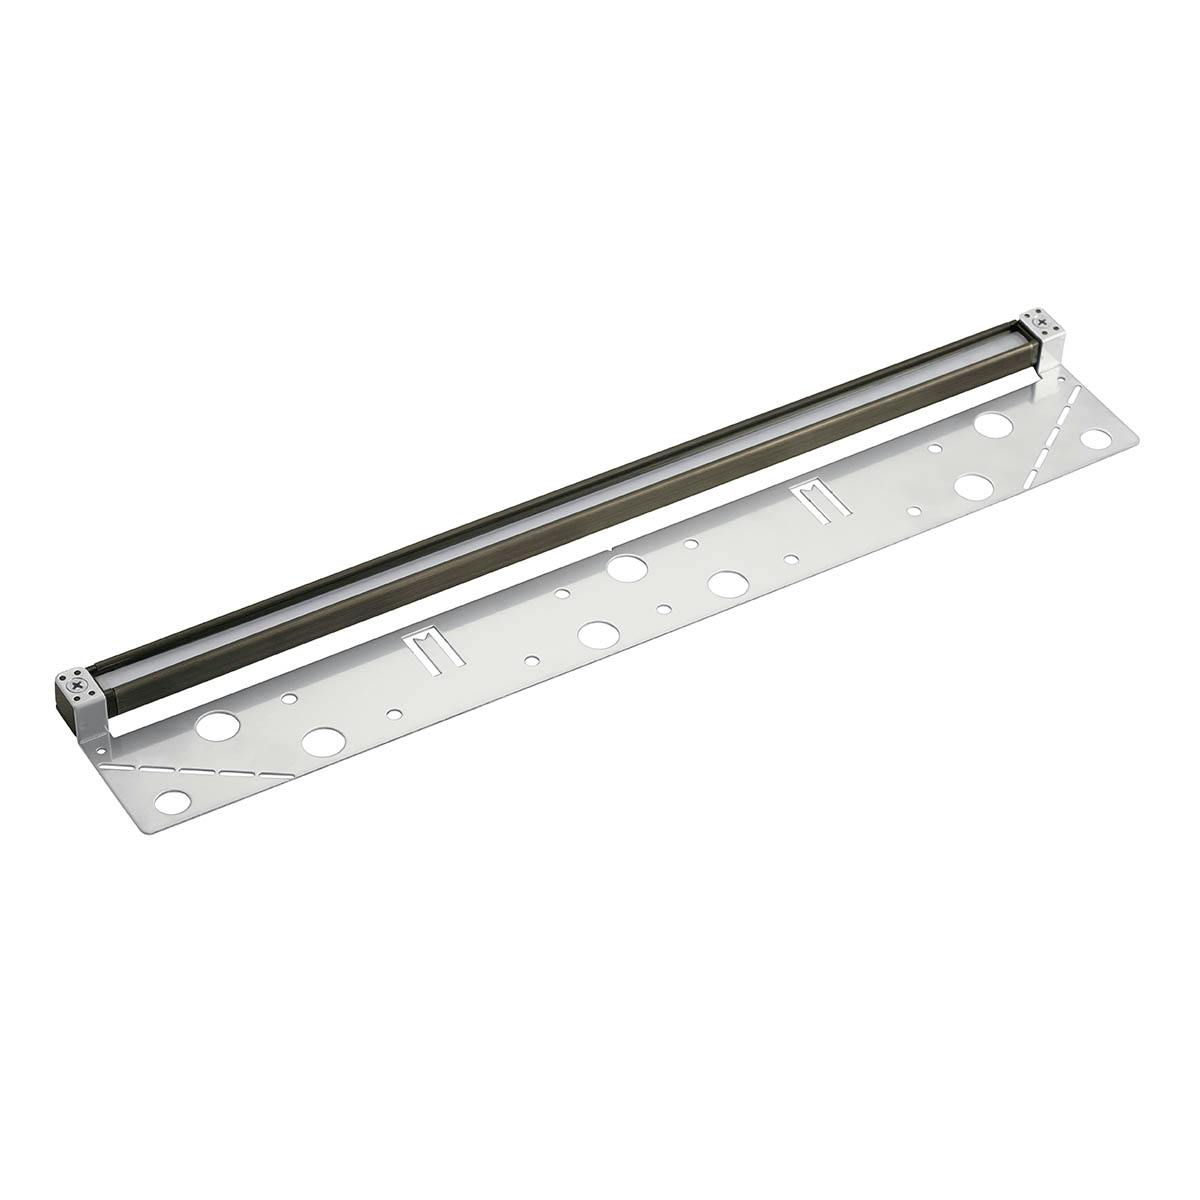 Product image of hardscape light 16103CBR30 with bracket